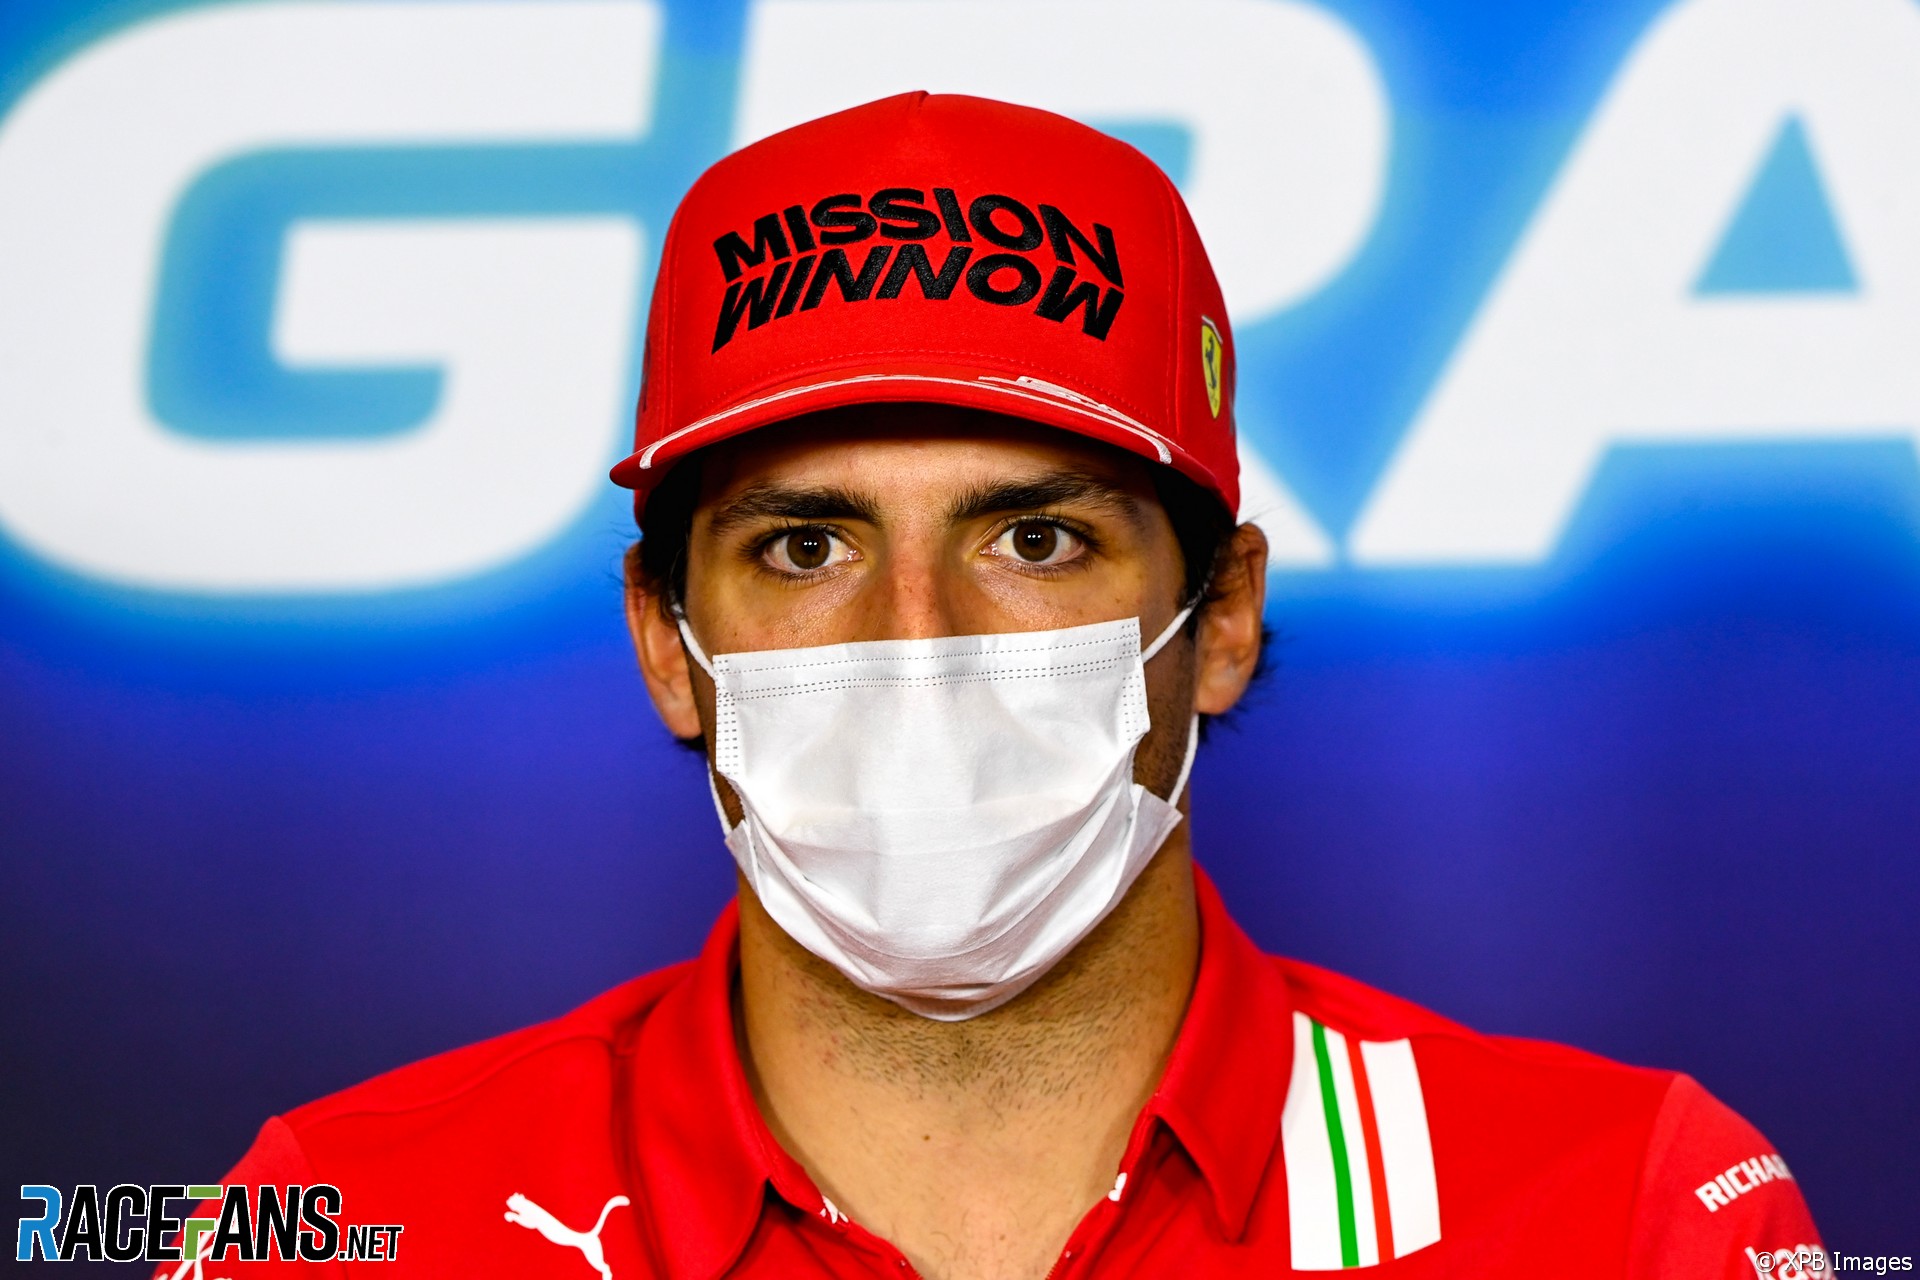 Carlos Sainz Jnr, Ferrari, Circuit de Catalunya, 2021